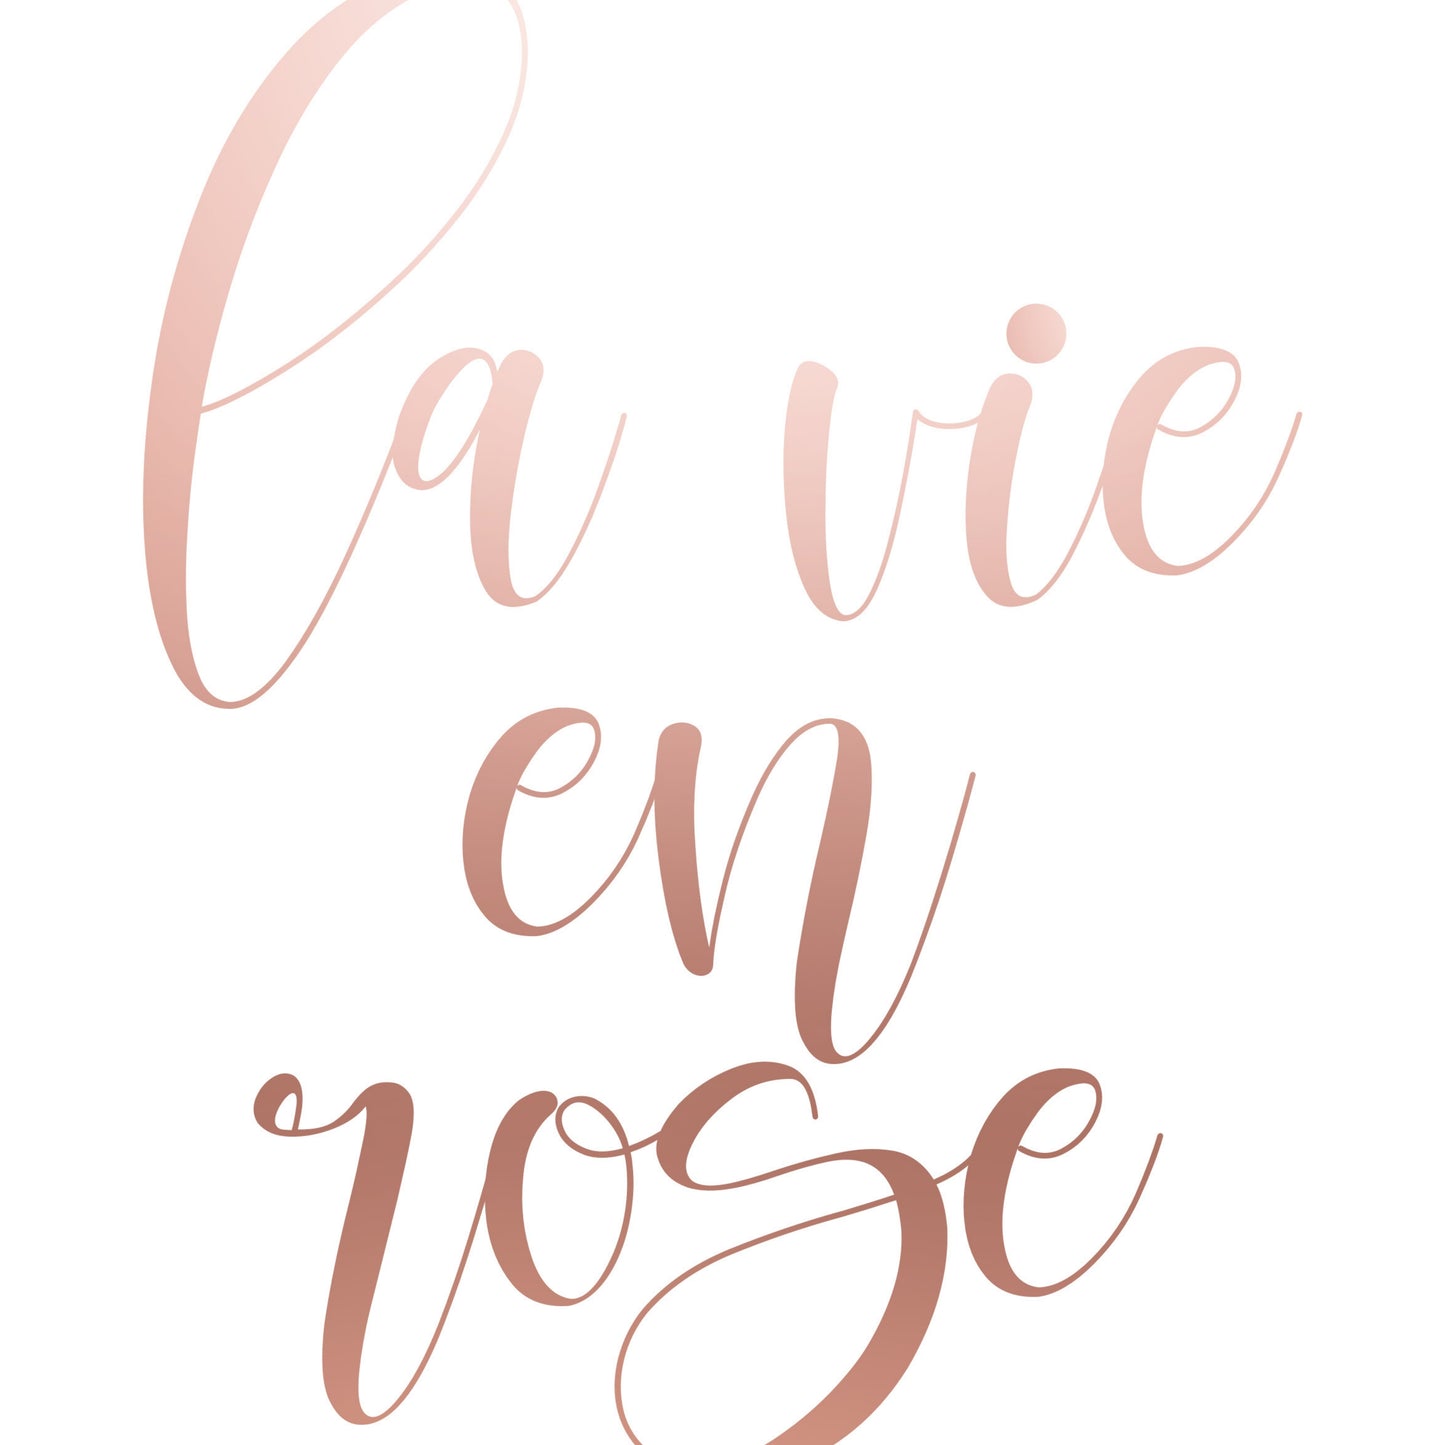 "La Vie En Rose," (Life is Pink) In Rose Gold, French Phrases & Sayings, Printable Art